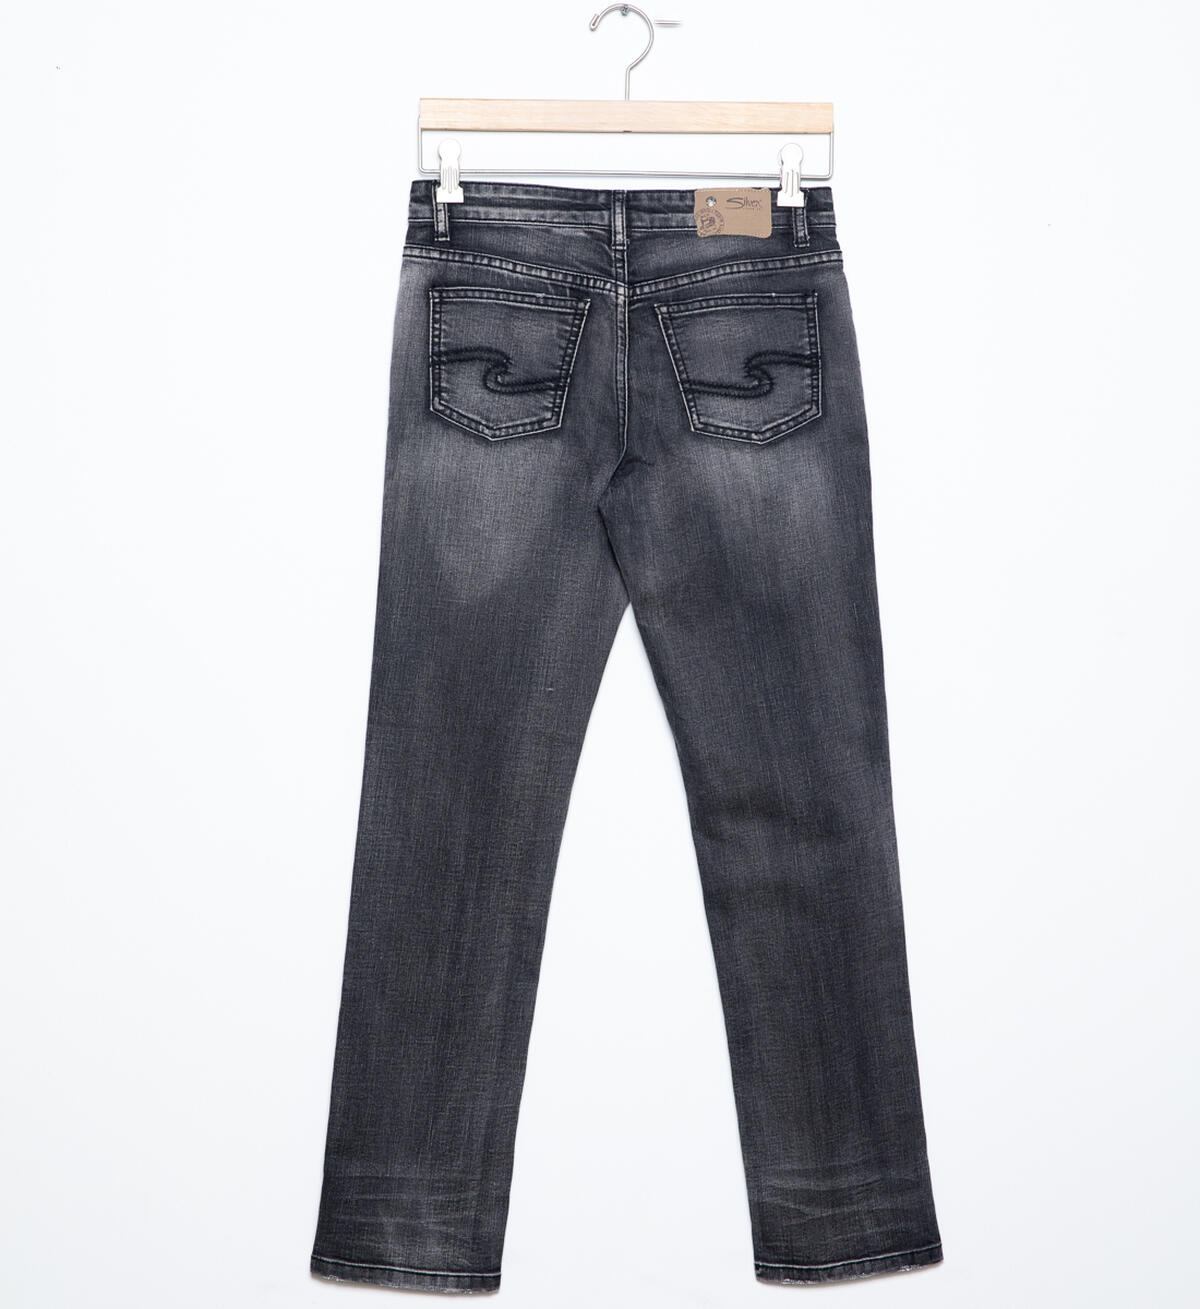 Nathan Skinny Jeans in Grey Wash  (7-16), , hi-res image number 1